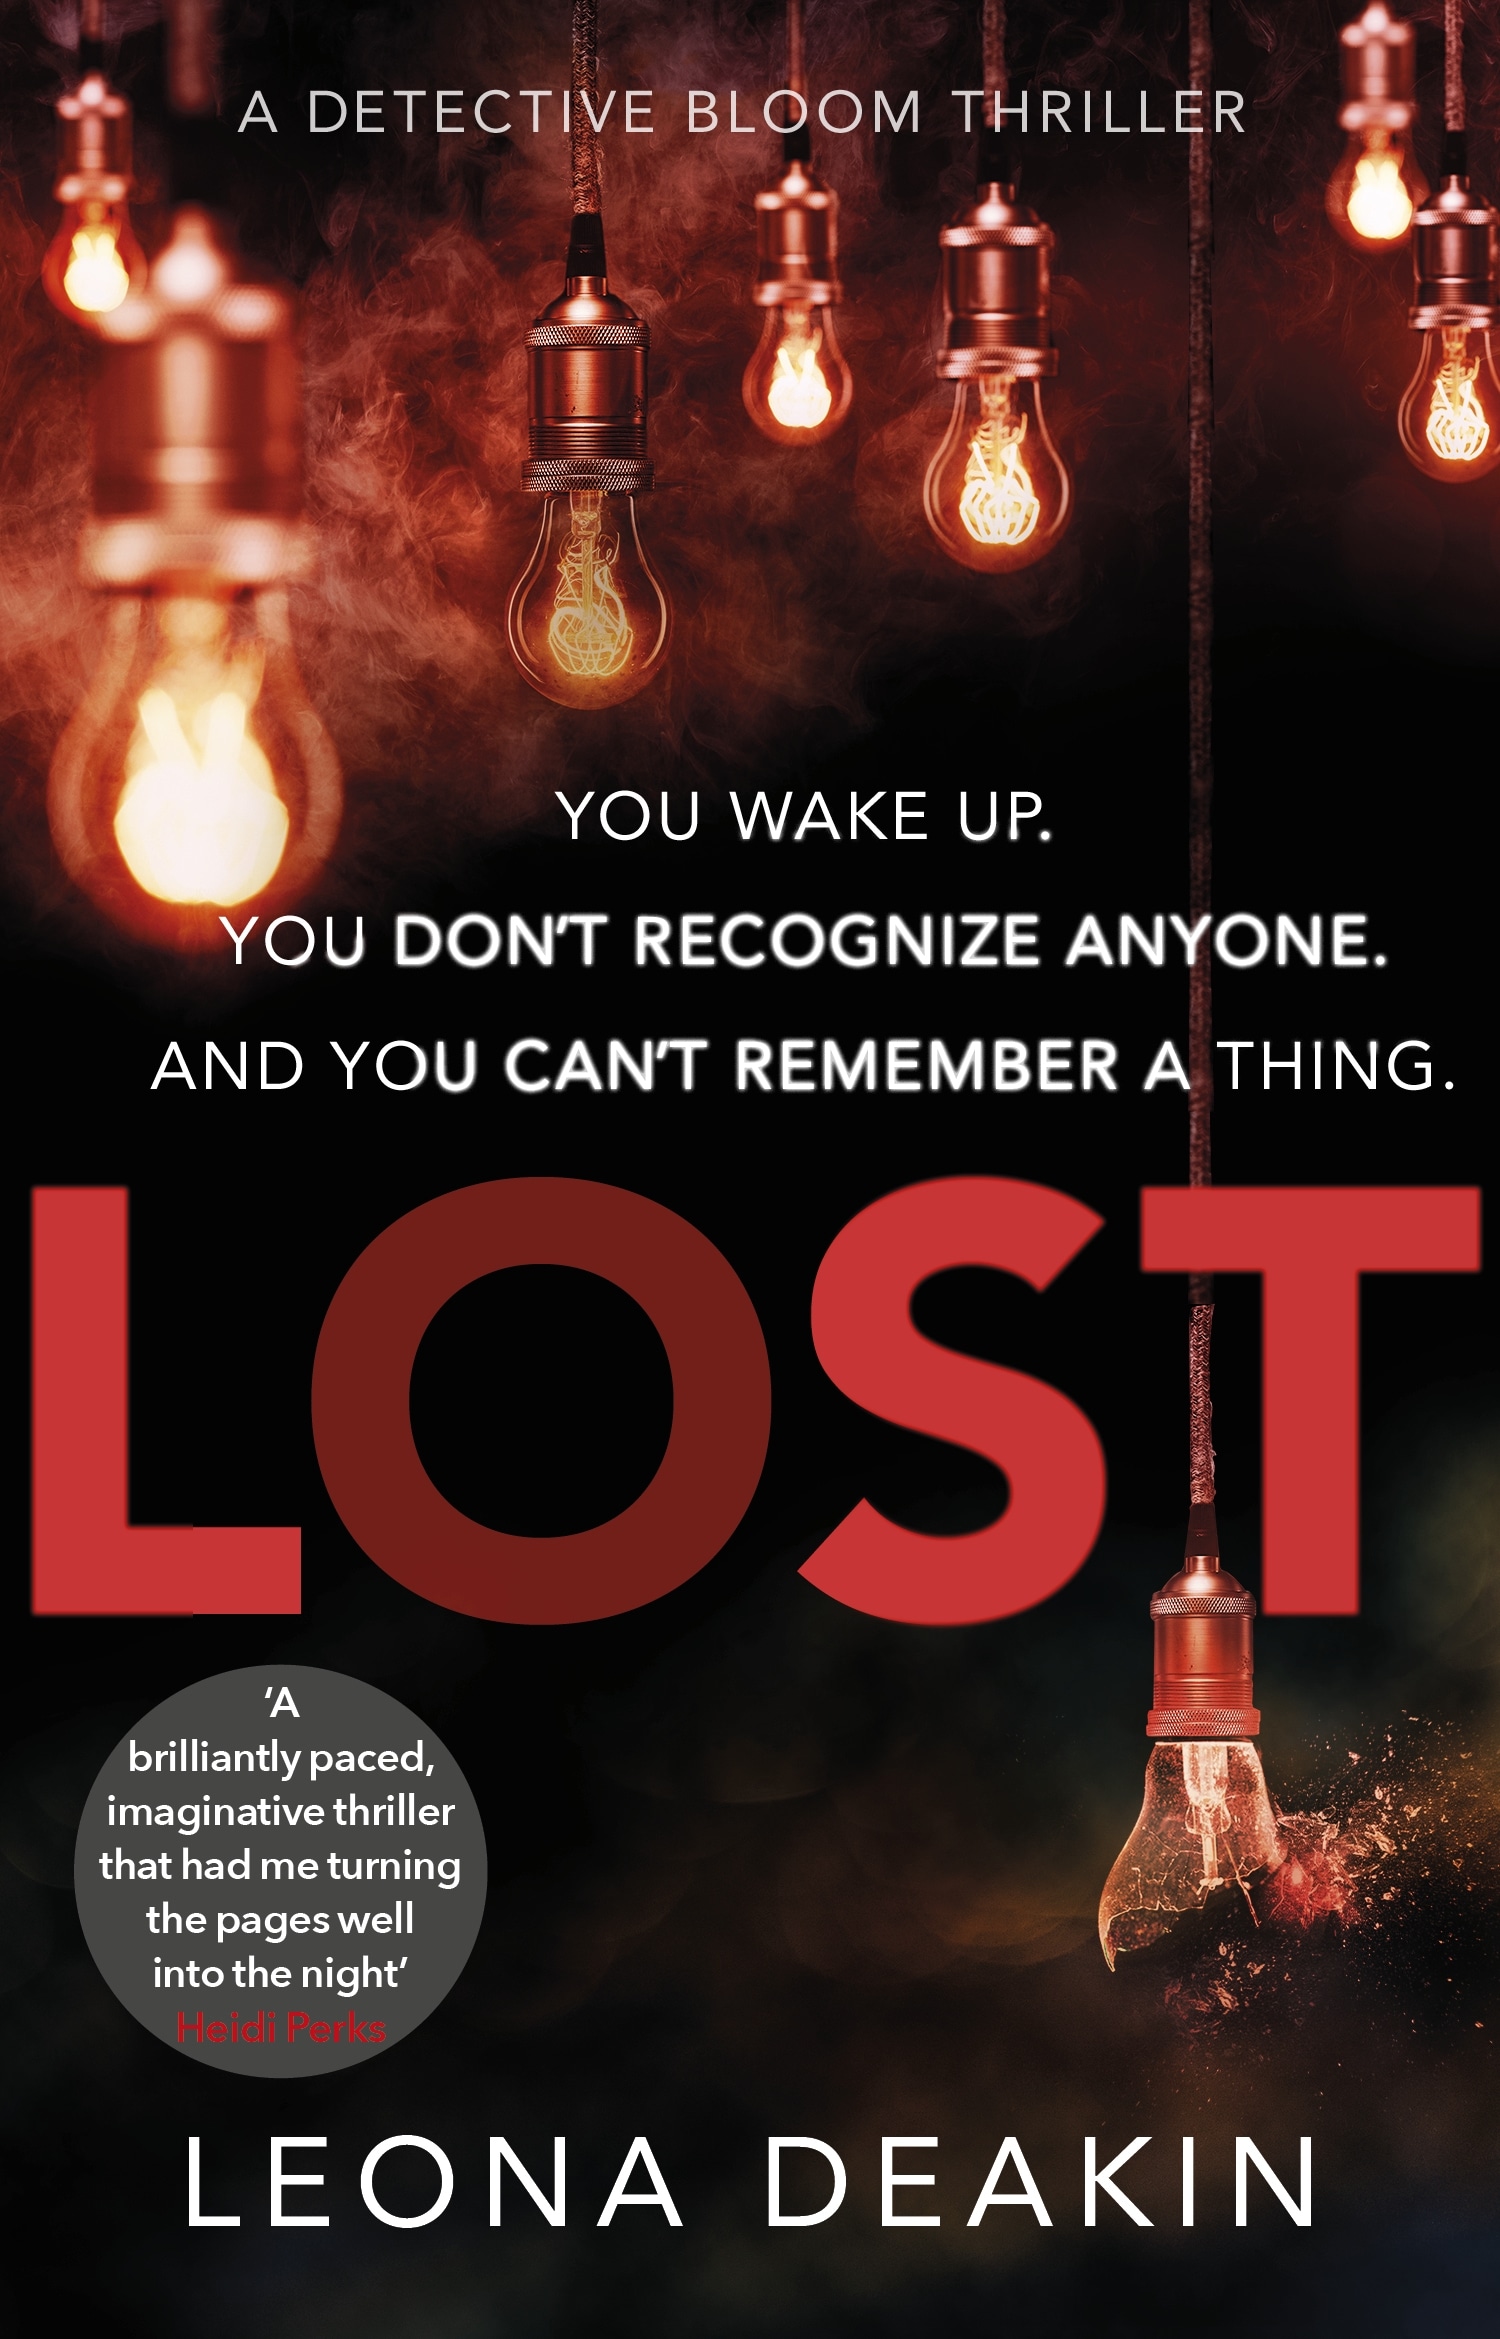 Book “Lost” by Leona Deakin — October 29, 2020